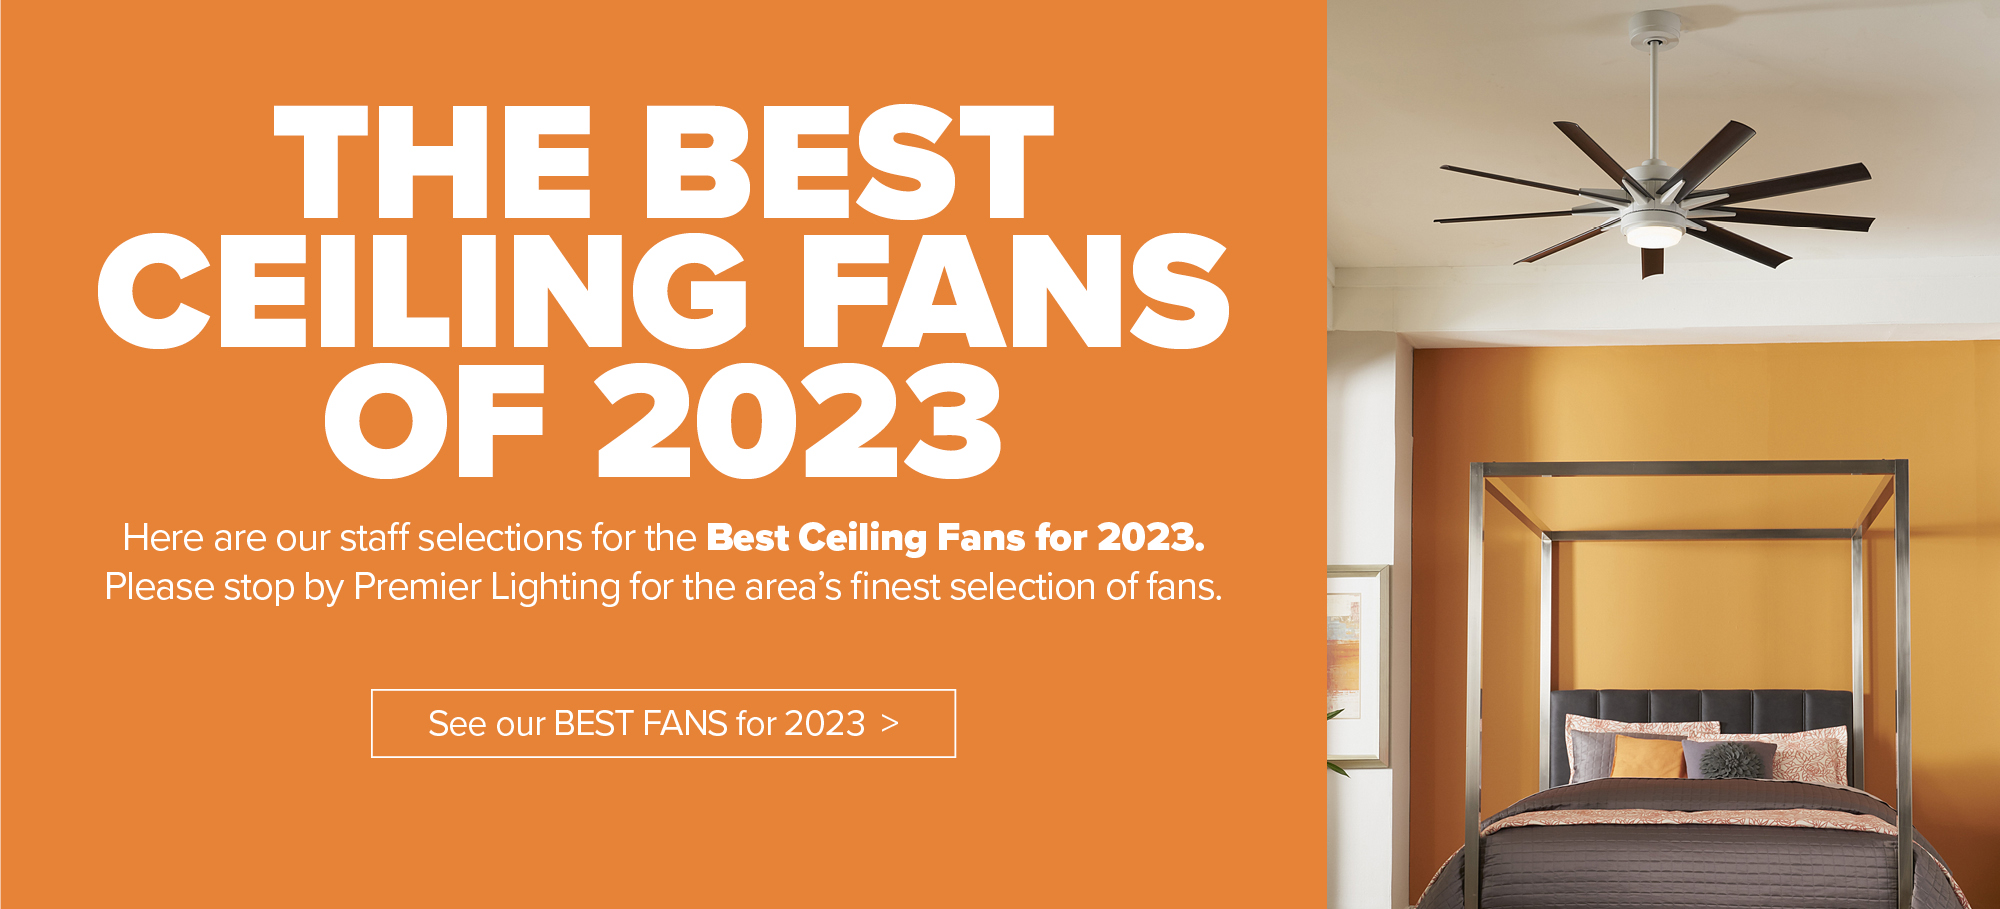 Best Ceiling Fans of 2023